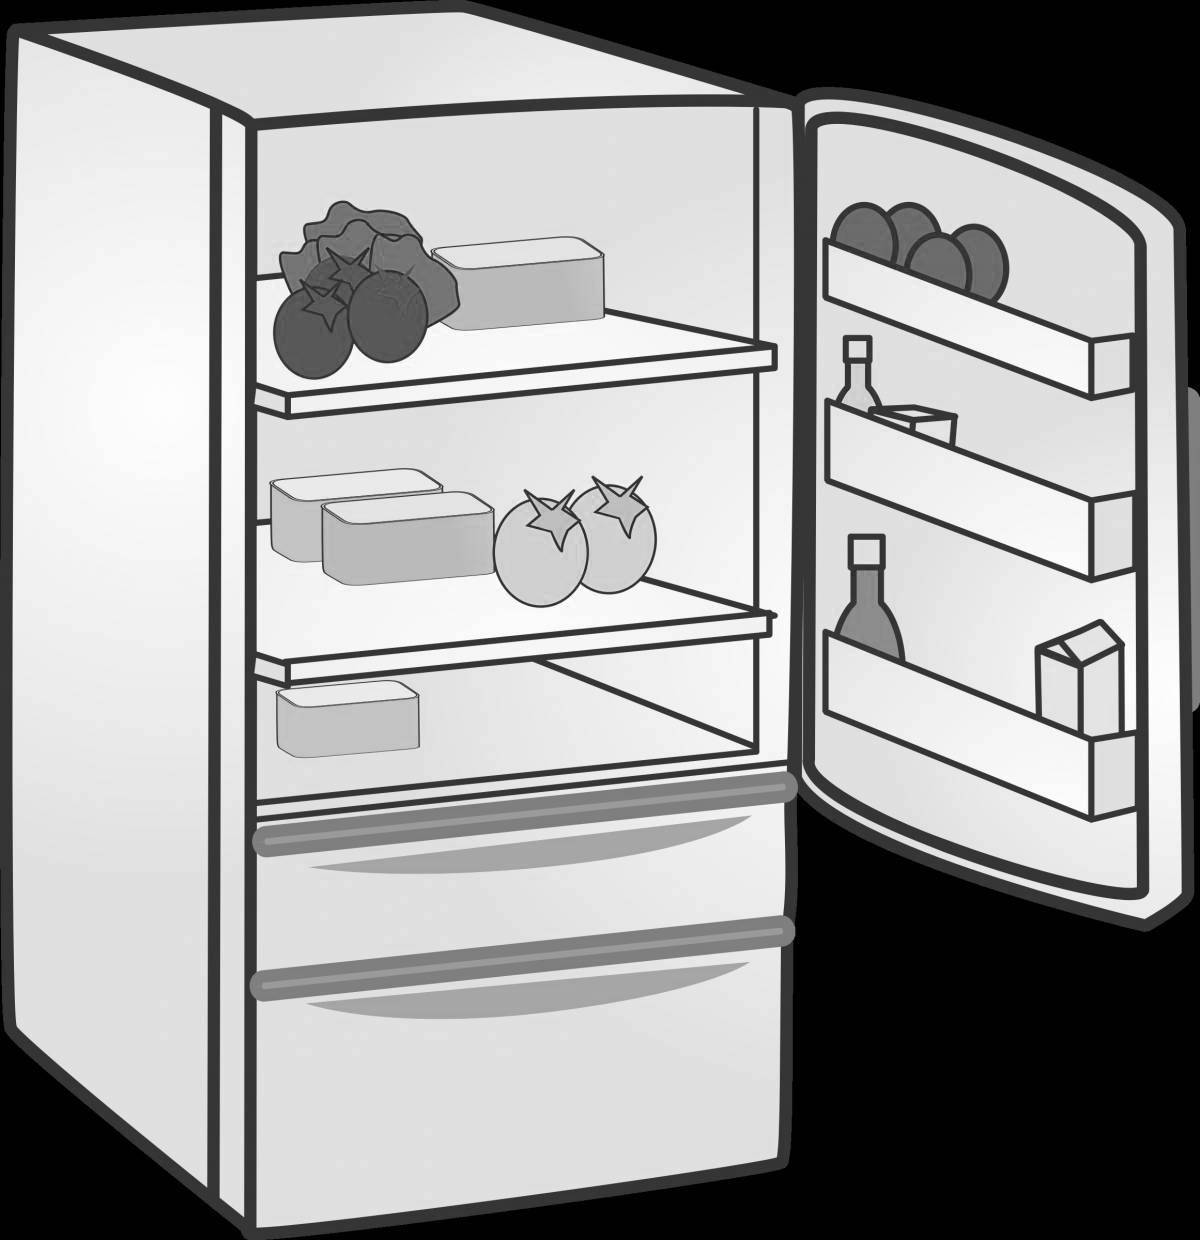 Fantastic refrigerator open coloring page